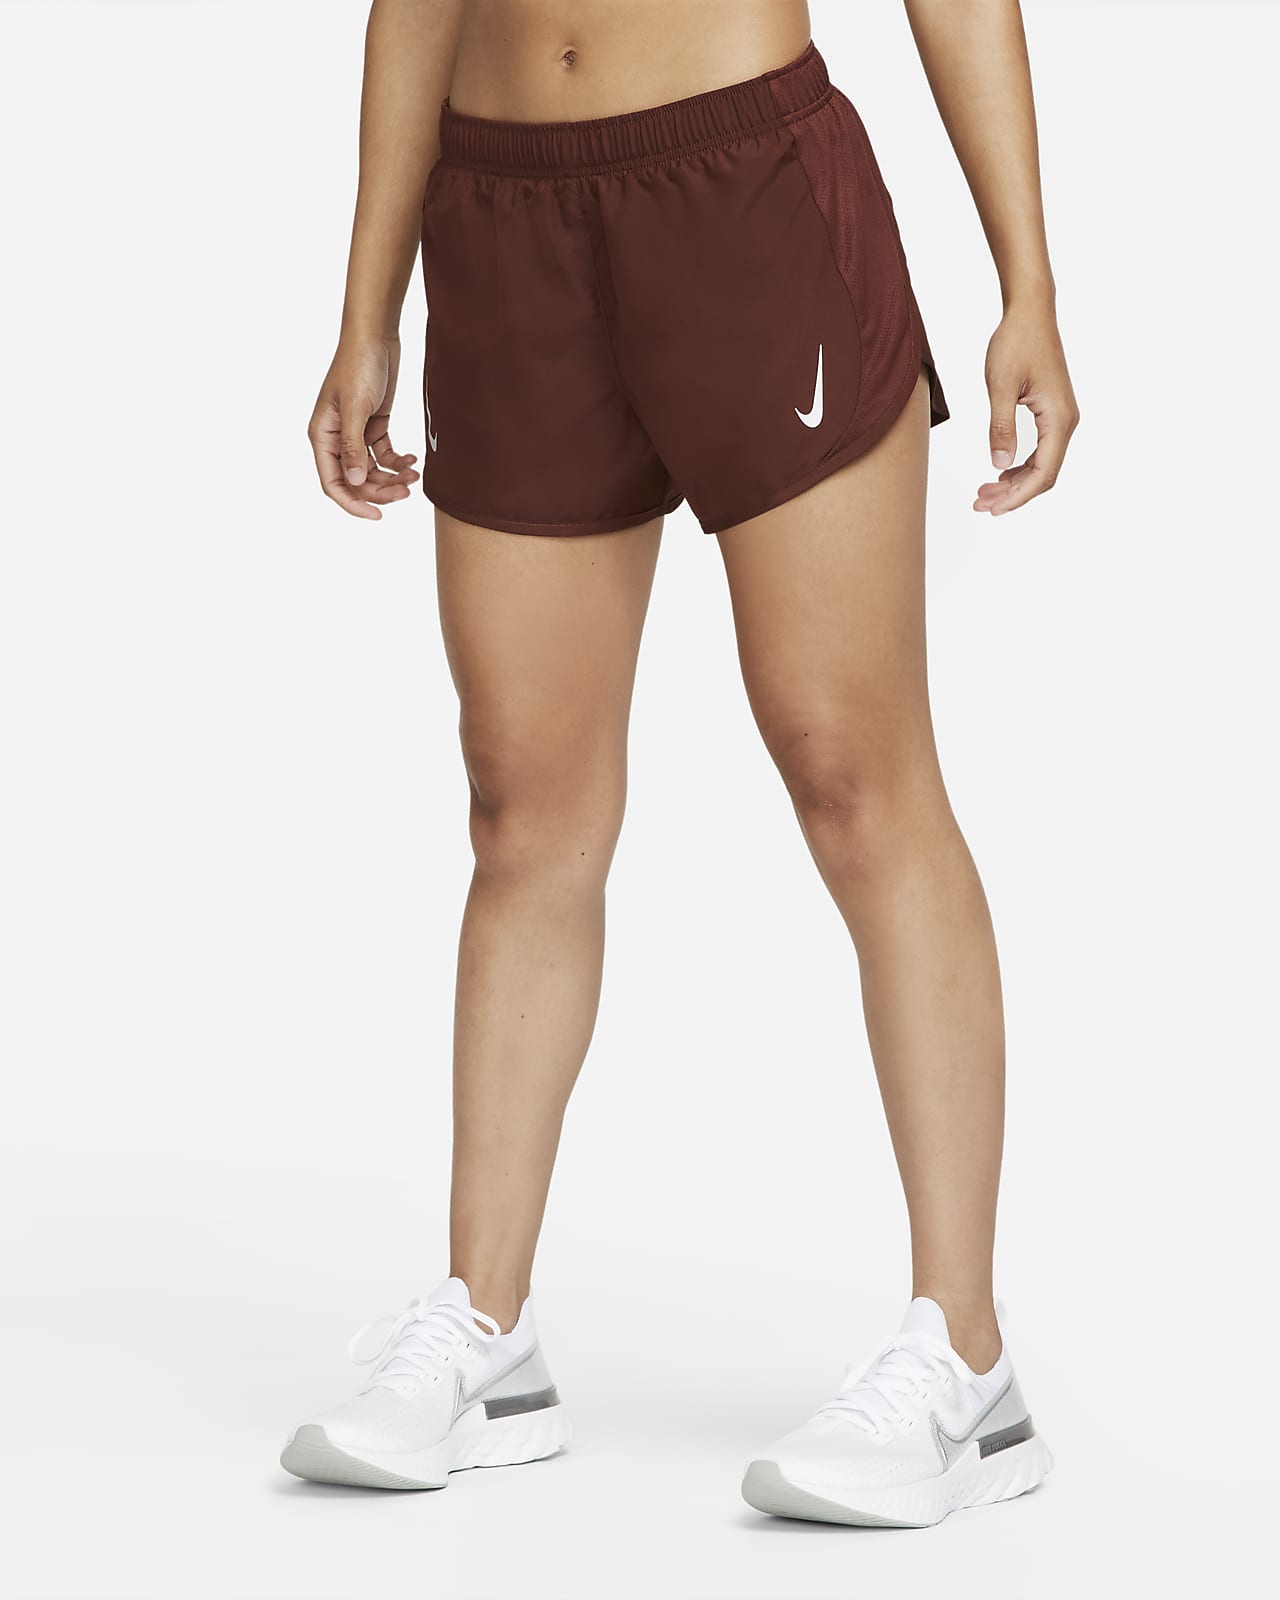 Nike Dri-FIT Tempo Race Pantalons curts de running - Dona